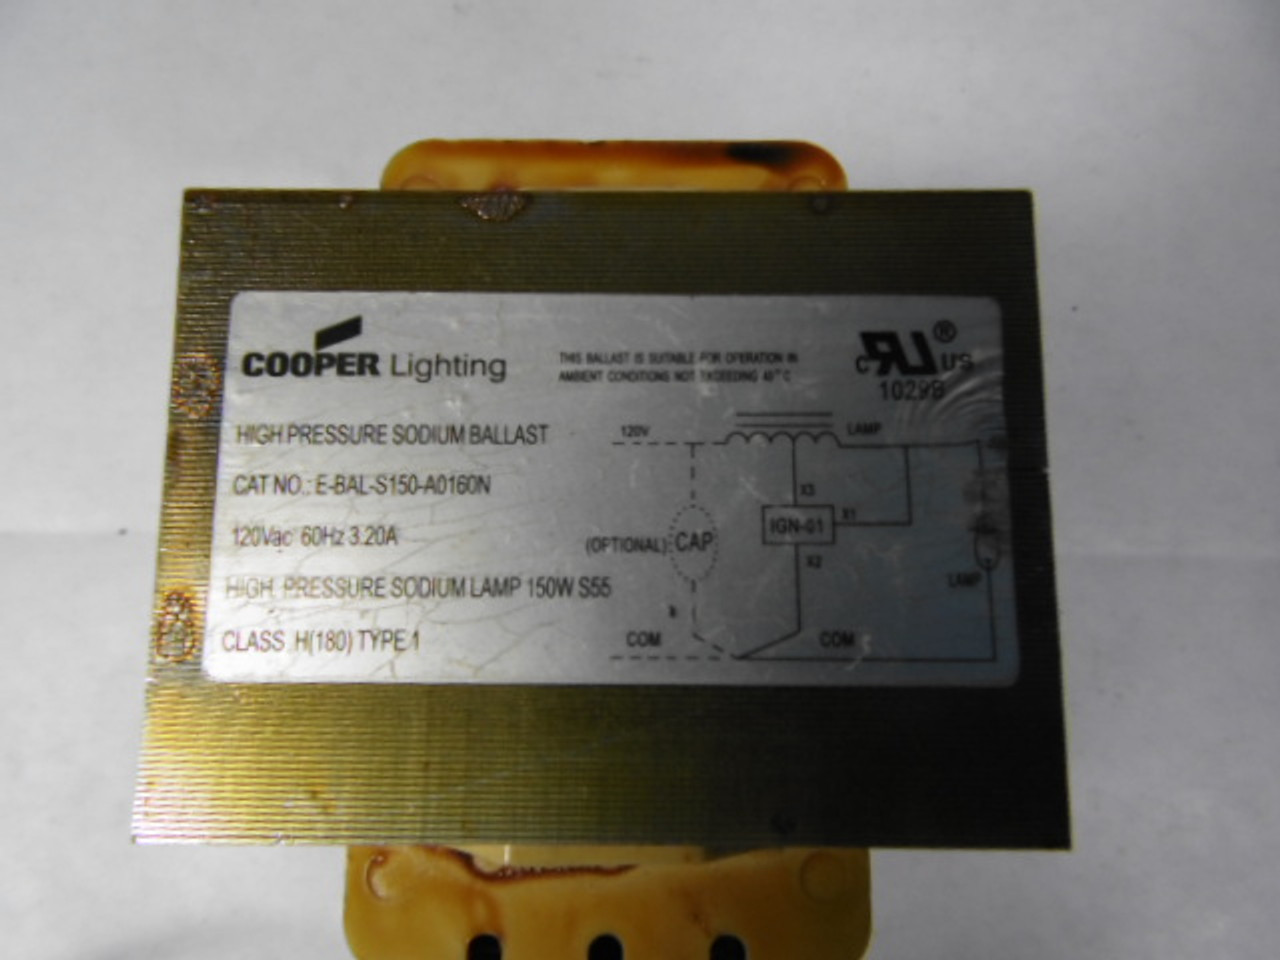 Cooper Lighting E-BAL-S150-A0160N Ballast 120 Vac 60 HZ 3.20 Amp USED